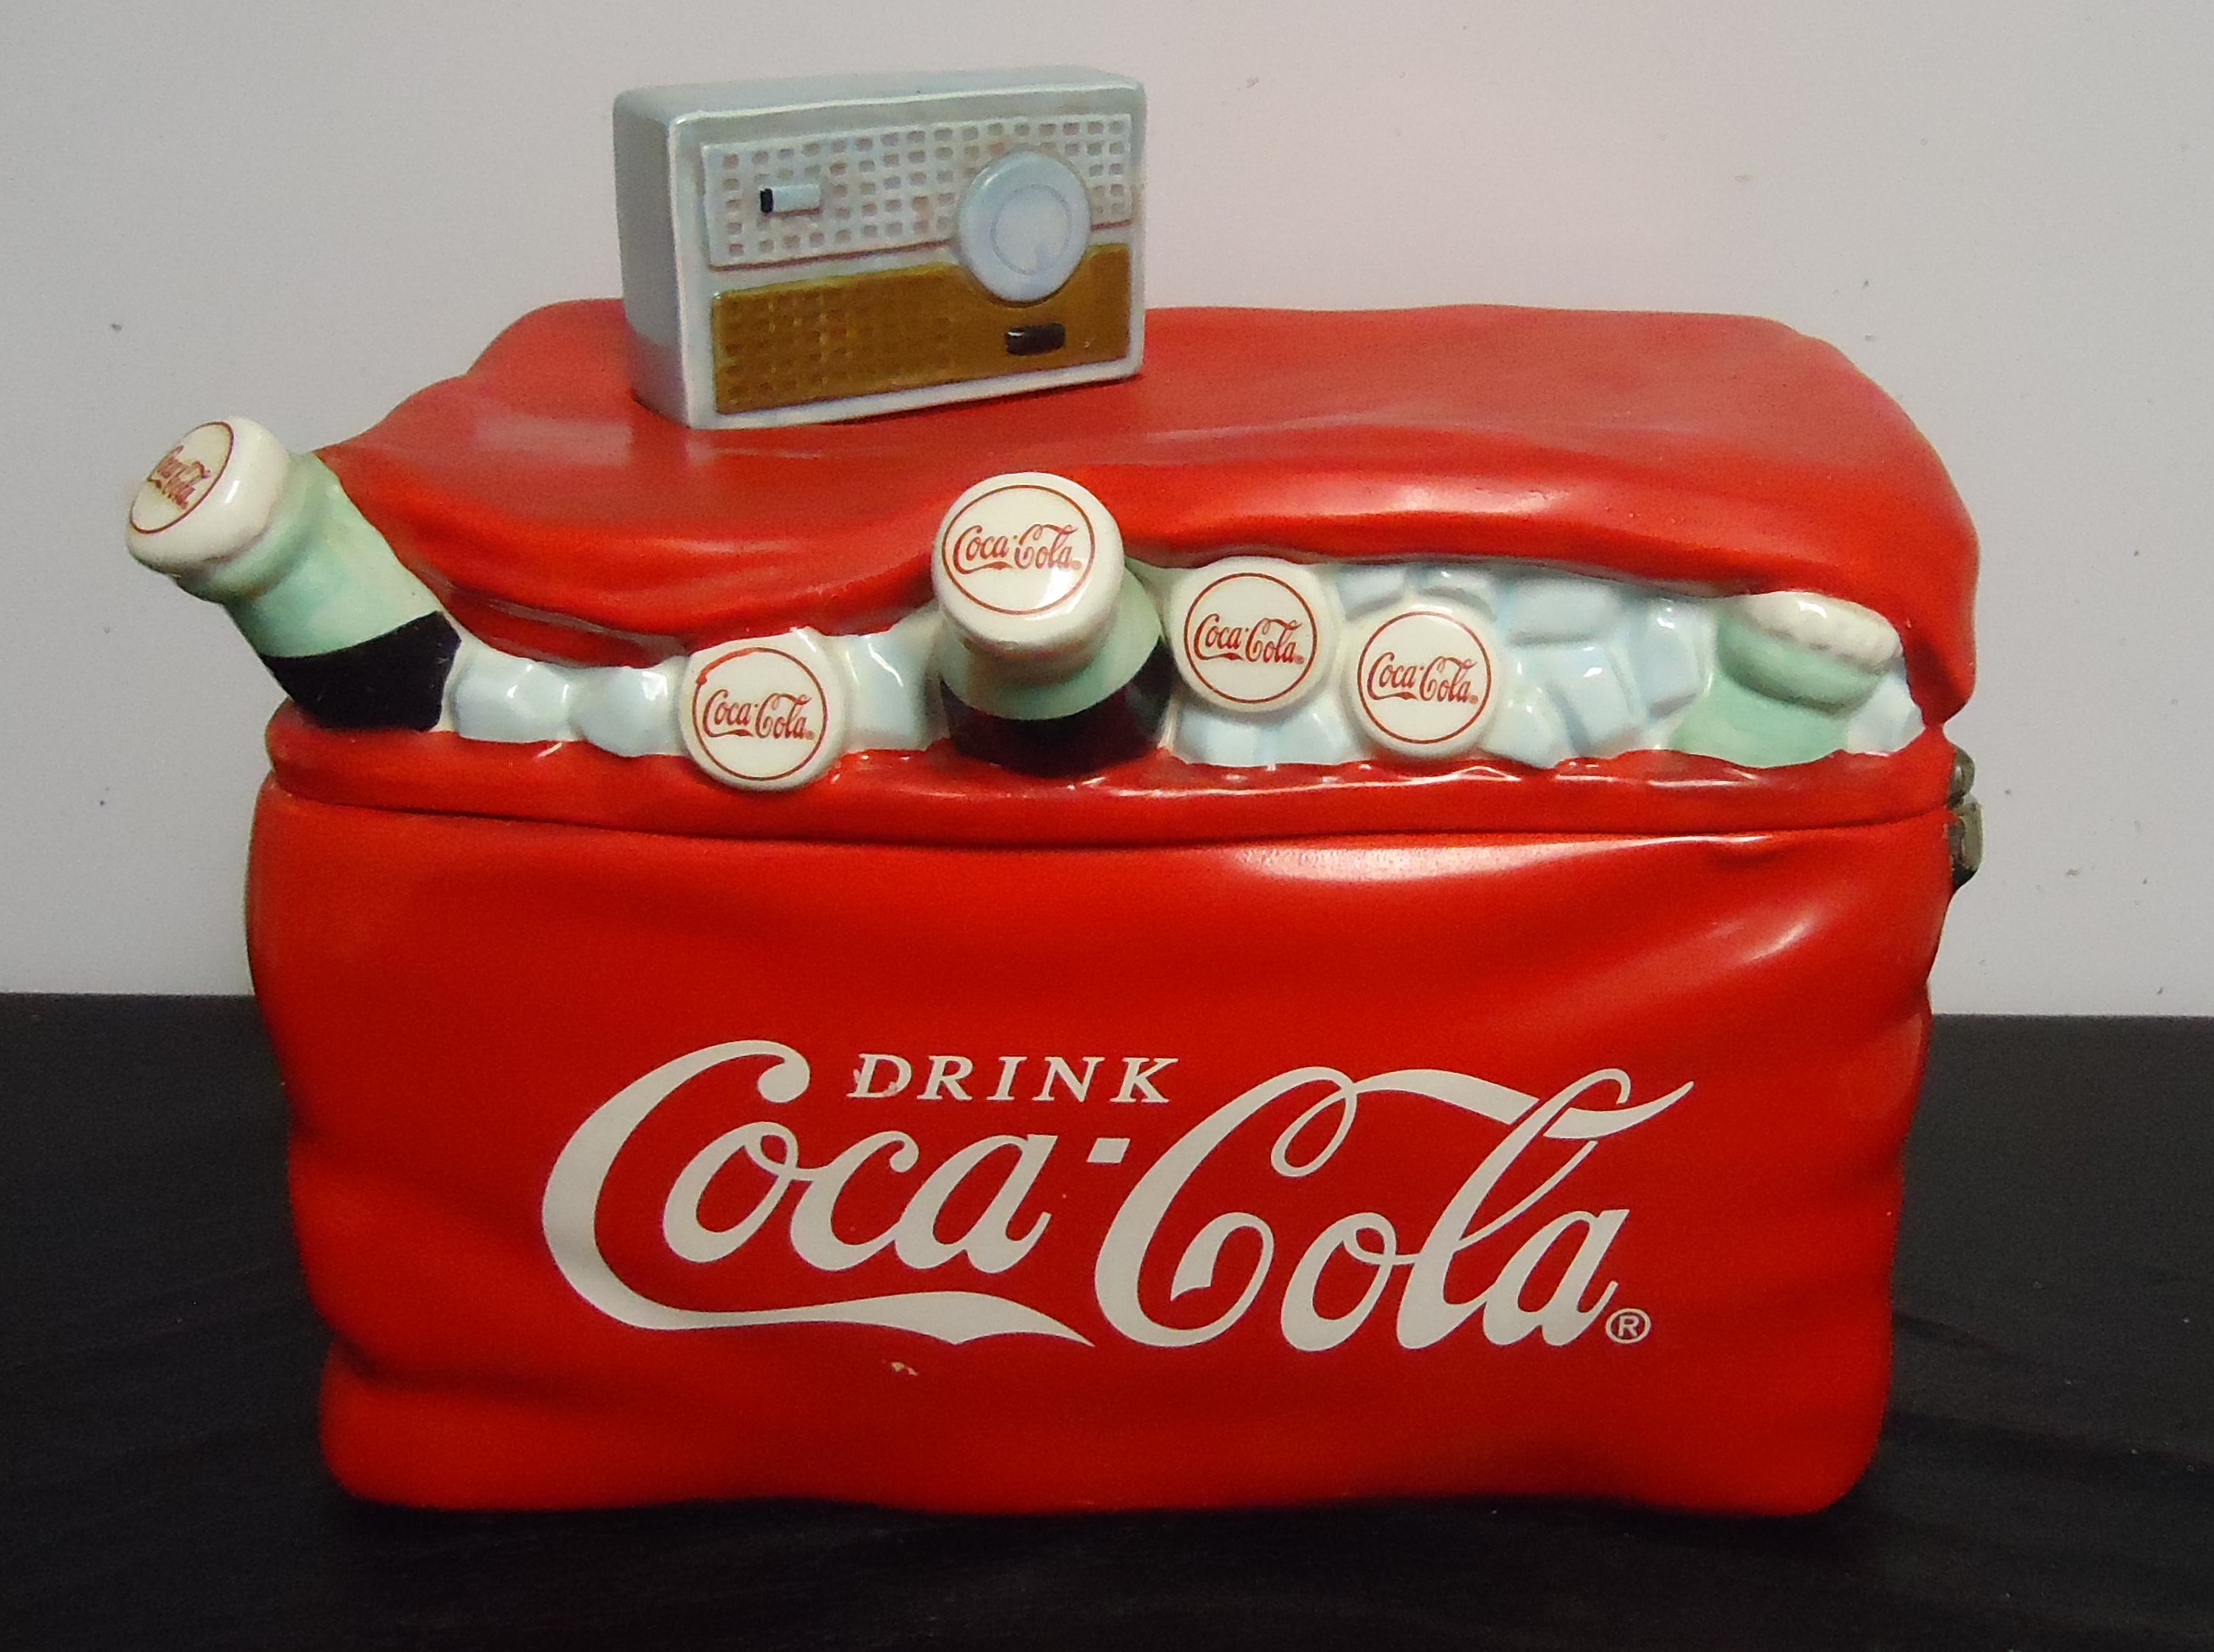 (2) "Vintage" Coca-Cola (Red Cooler)
Cookie Jar 
$60.00